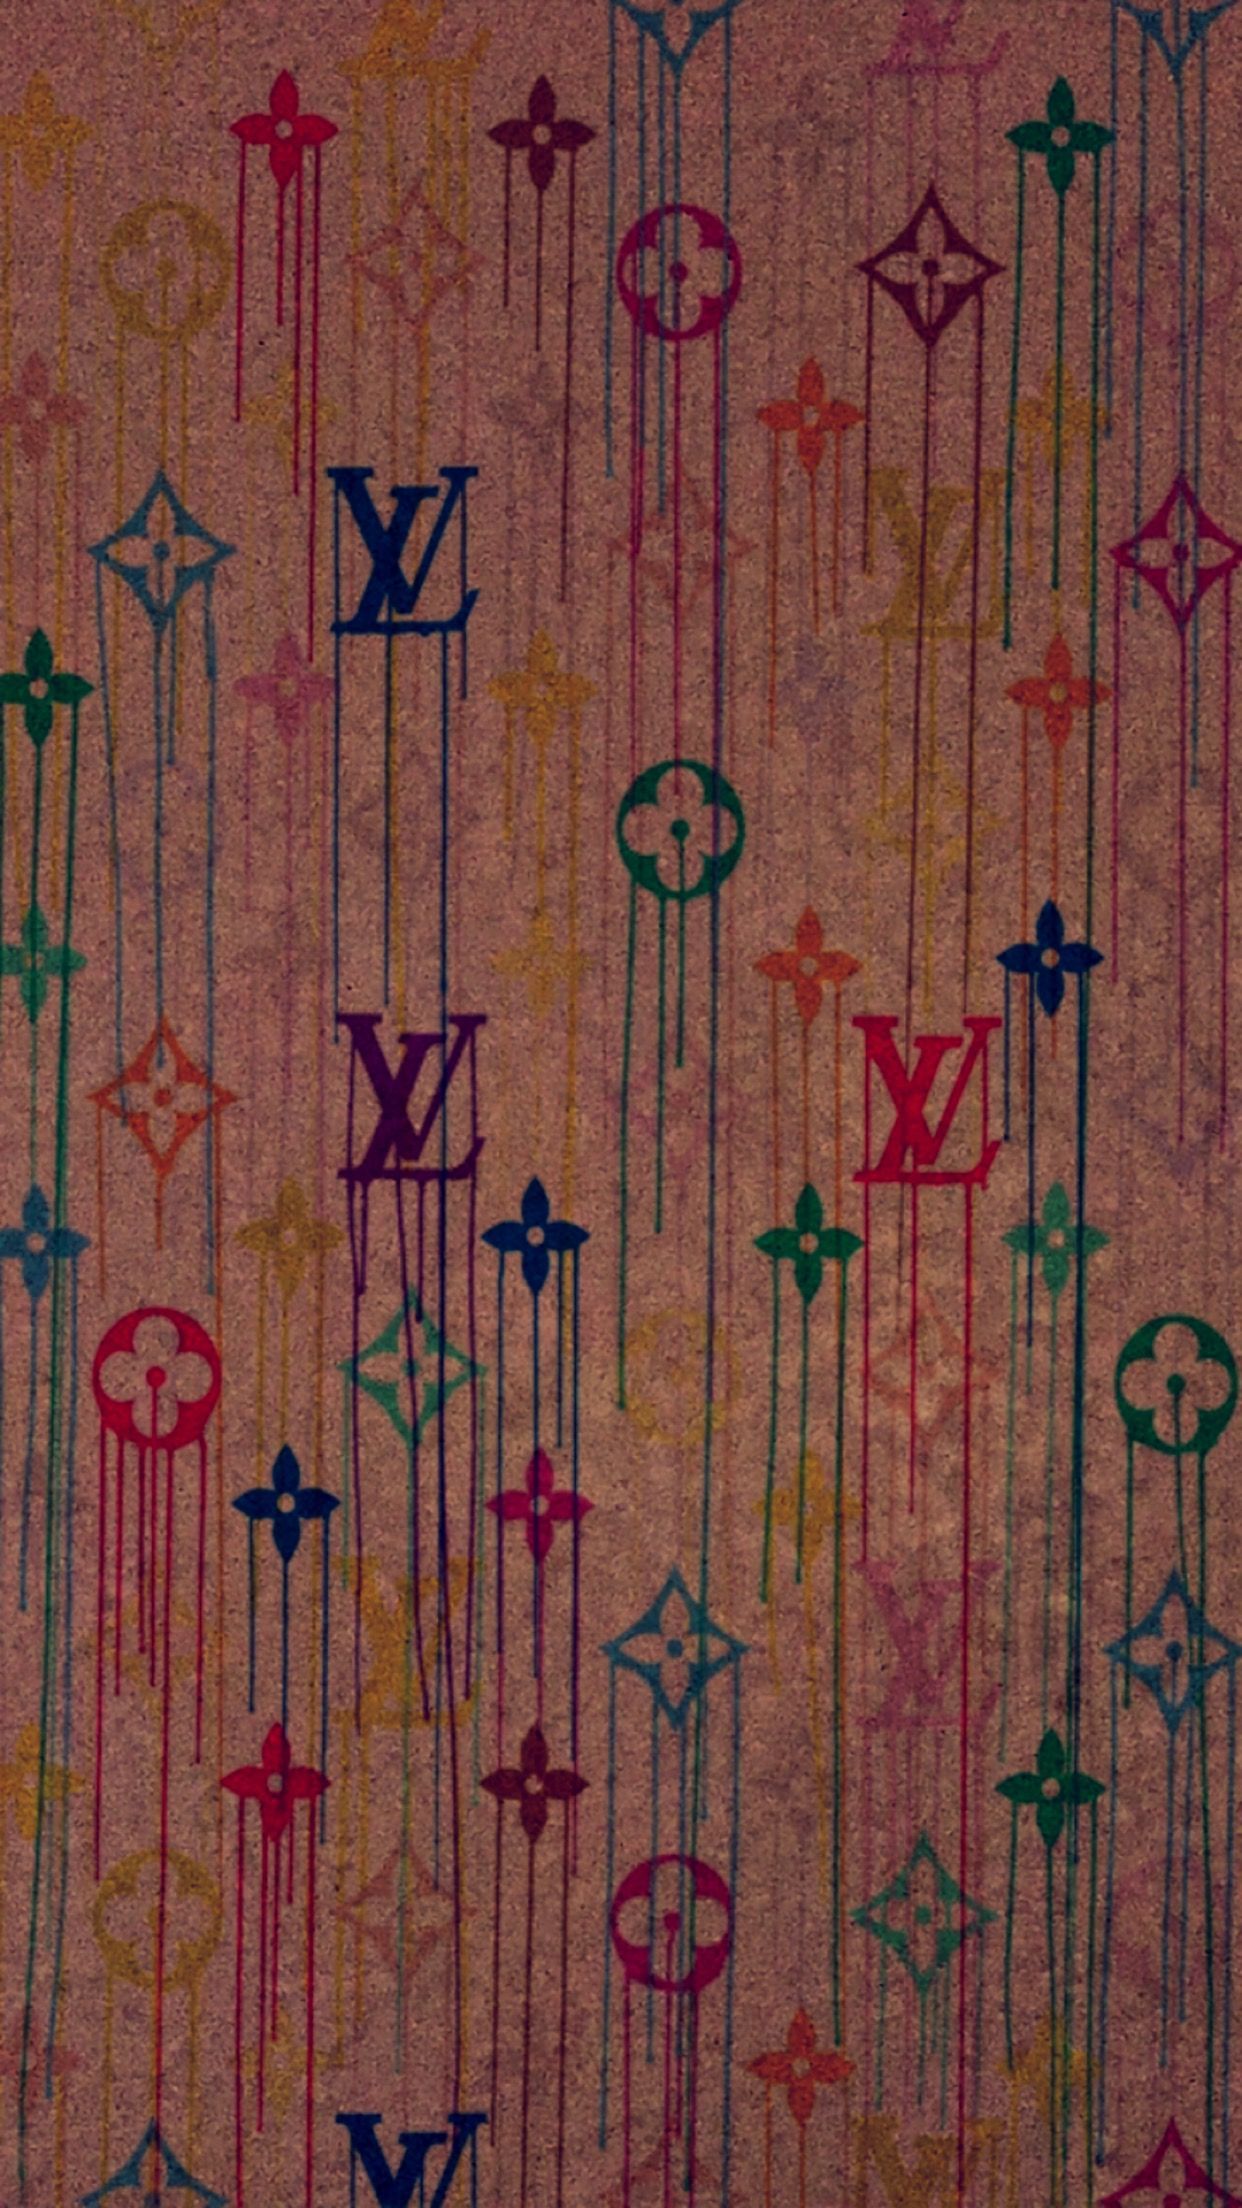 Louis Vuitton iPhone Wallpapers - Wallpaper Cave